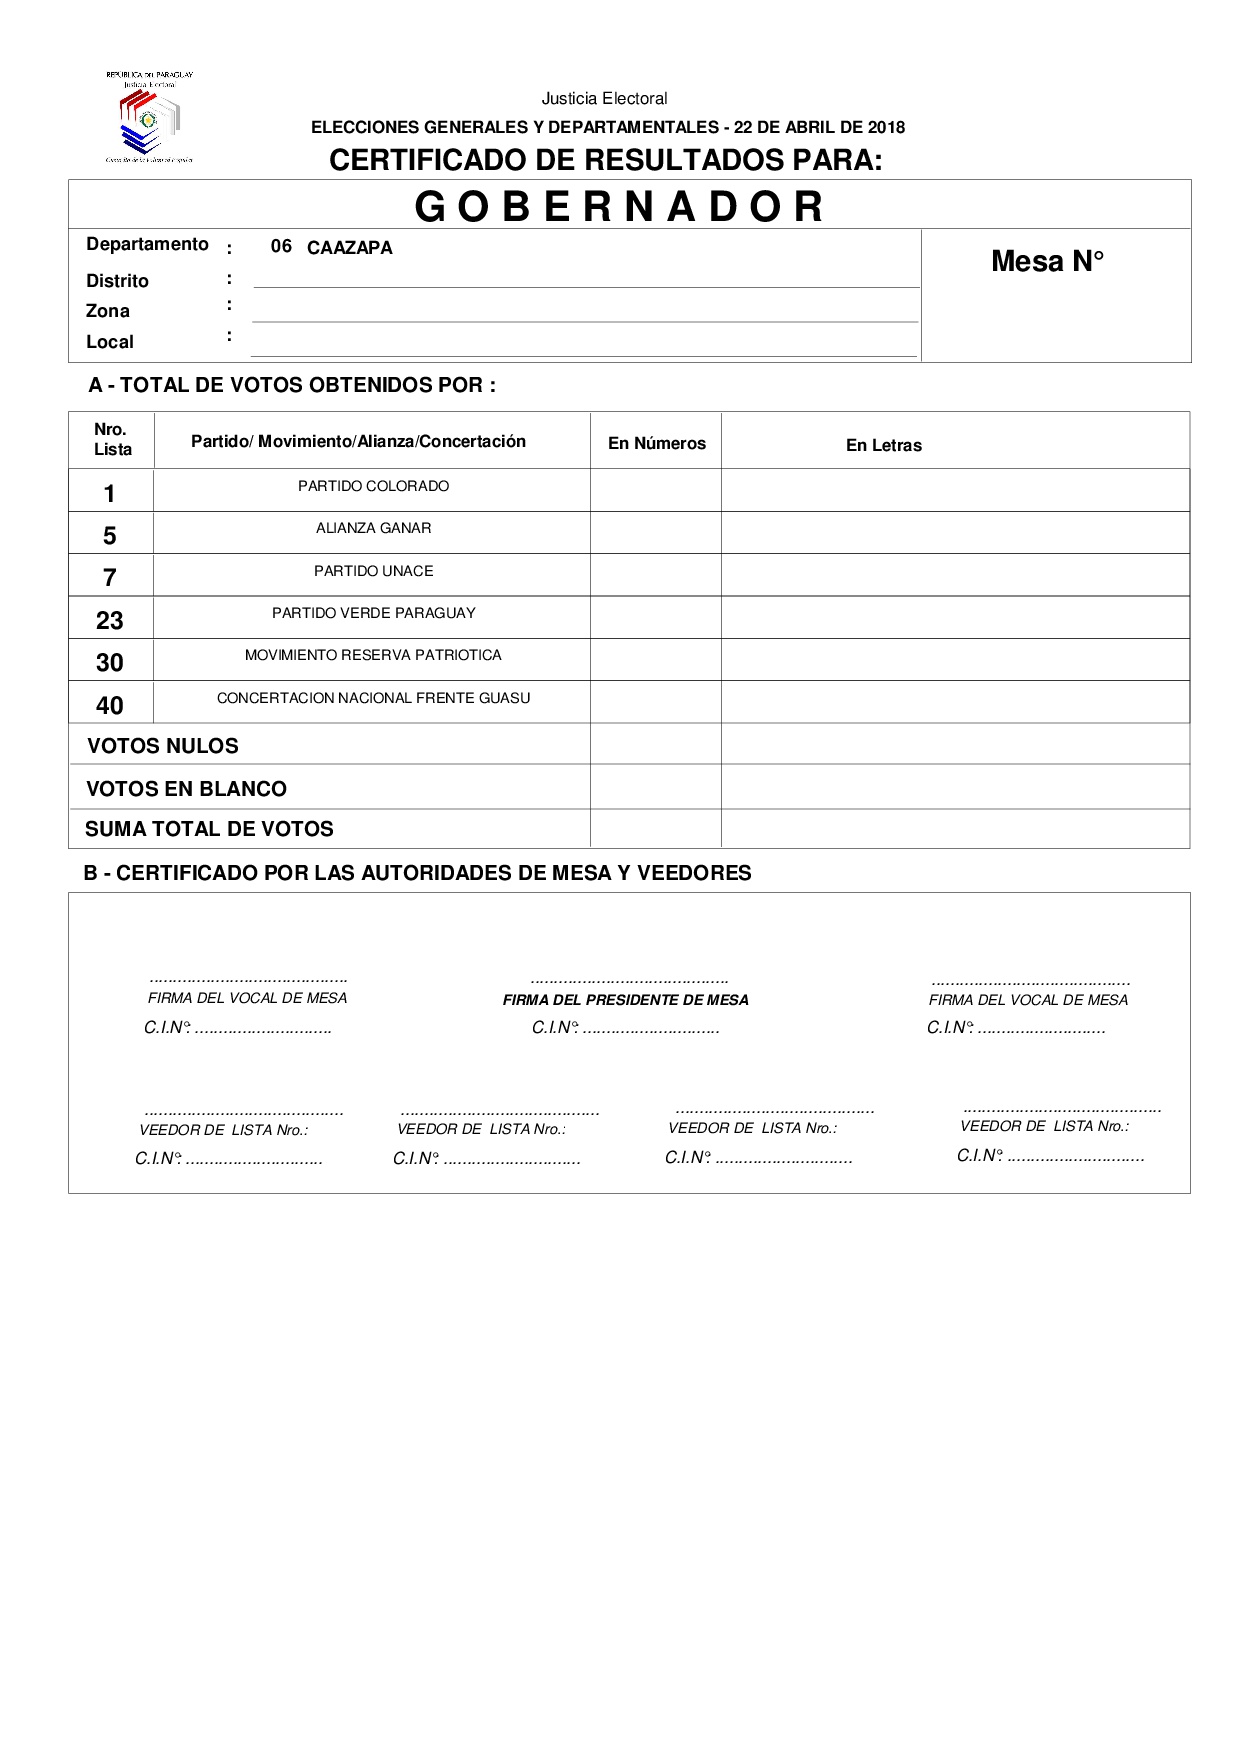 Certificado de Resultados Para GOBERNADOR de CAAZAPA